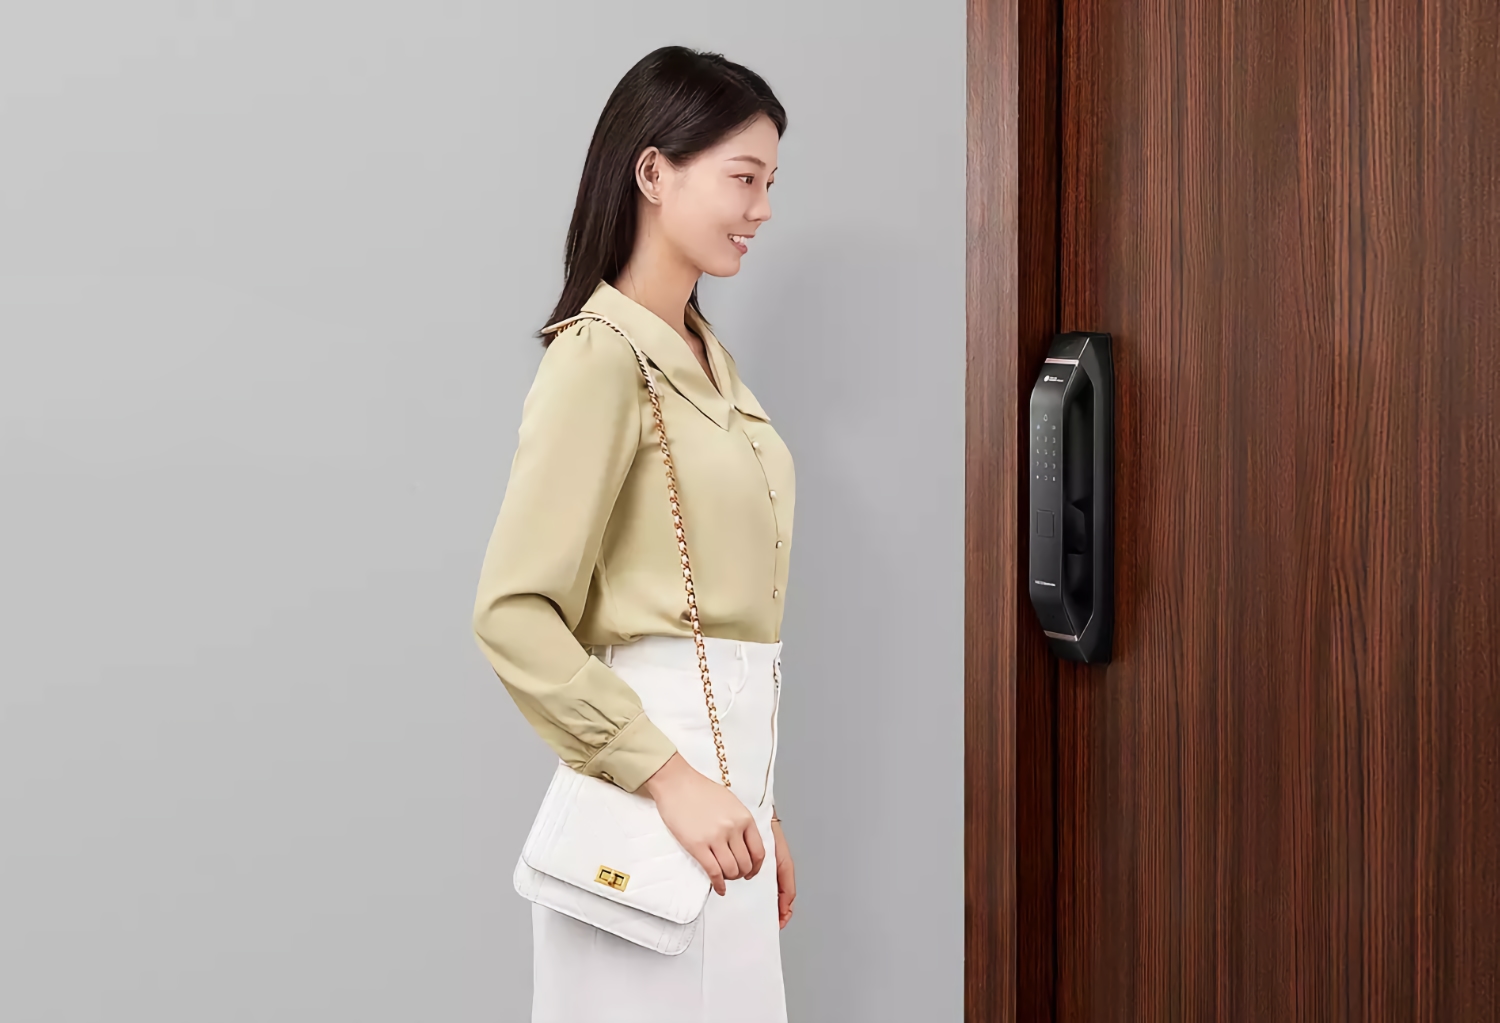 Huawei stellt Smart Selection Dessmann Smart Door Lock vor: Intelligentes Türschloss mit Gesichtsentriegelung